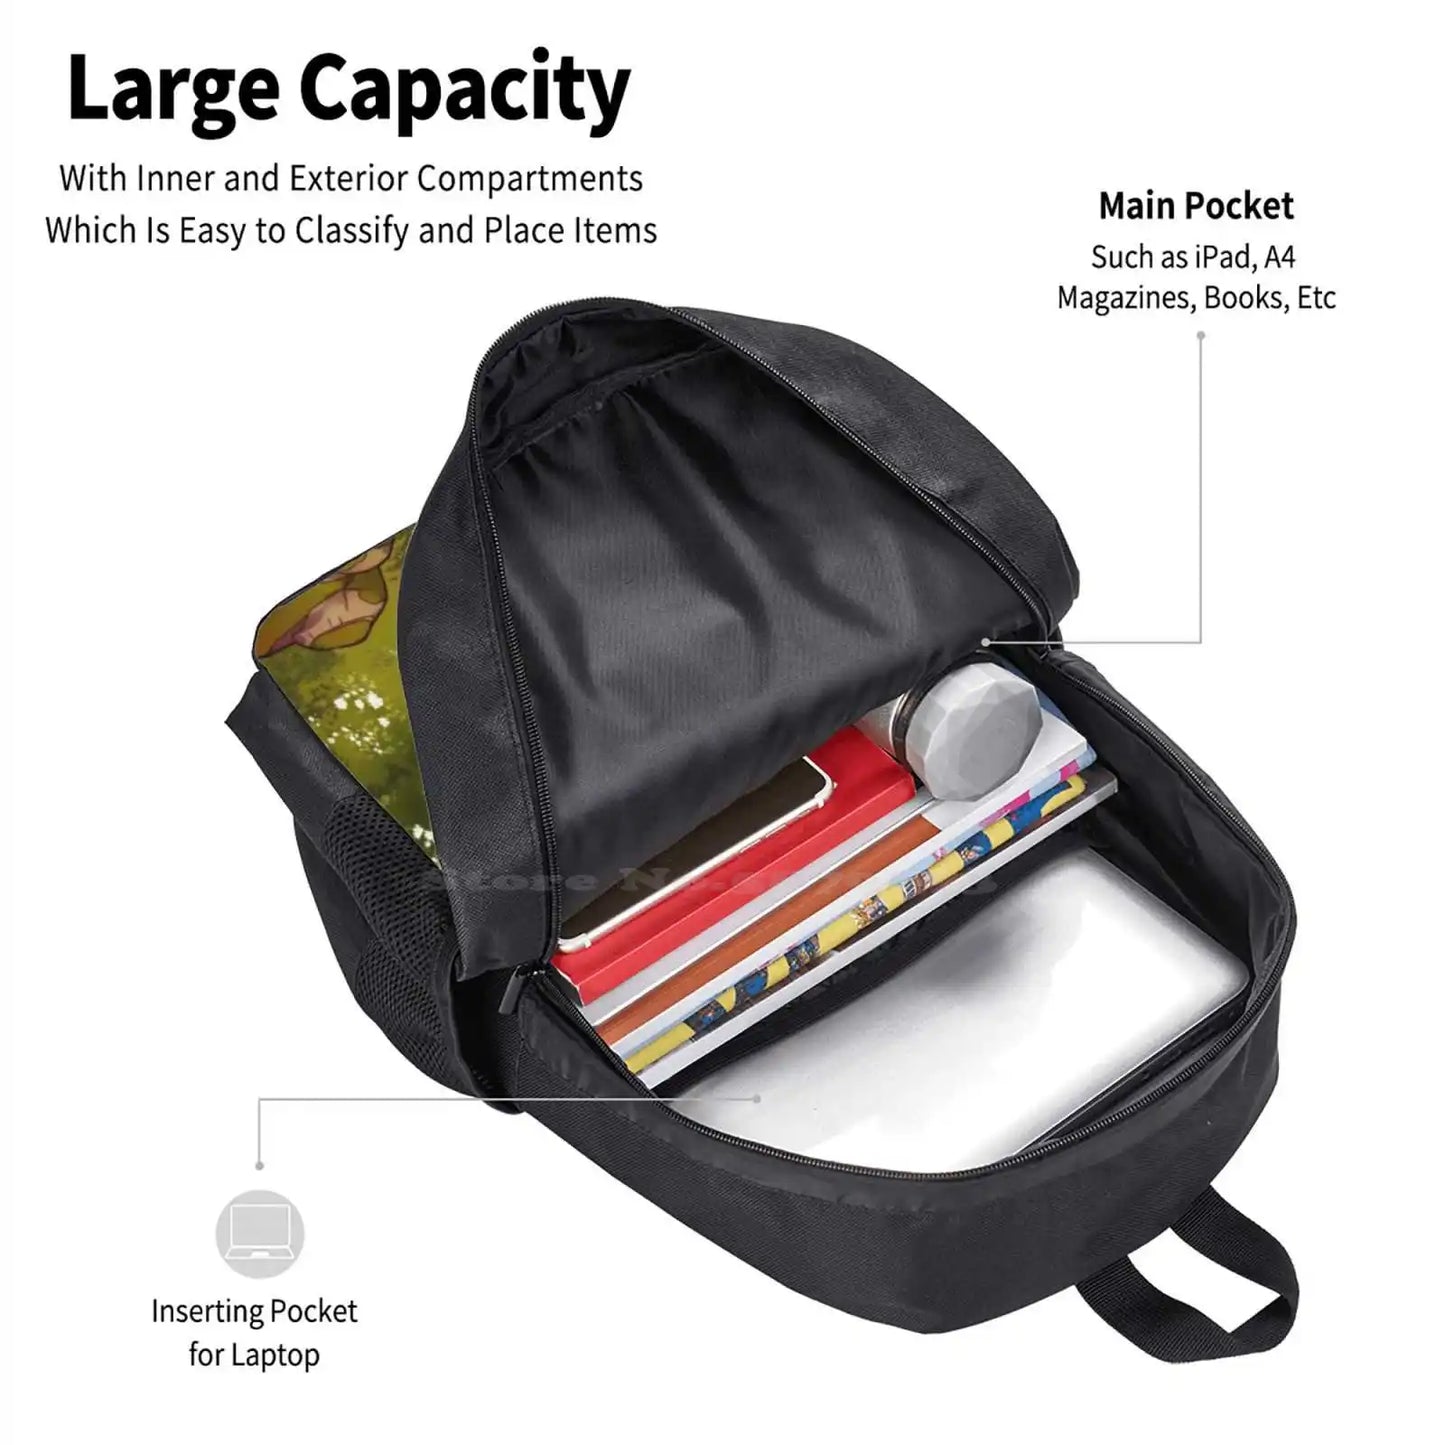 Chocobos Backpack For Student School Laptop Travel Bag Ffxv Landscape Final Fantasy 15 Black Chocobo Chocochick